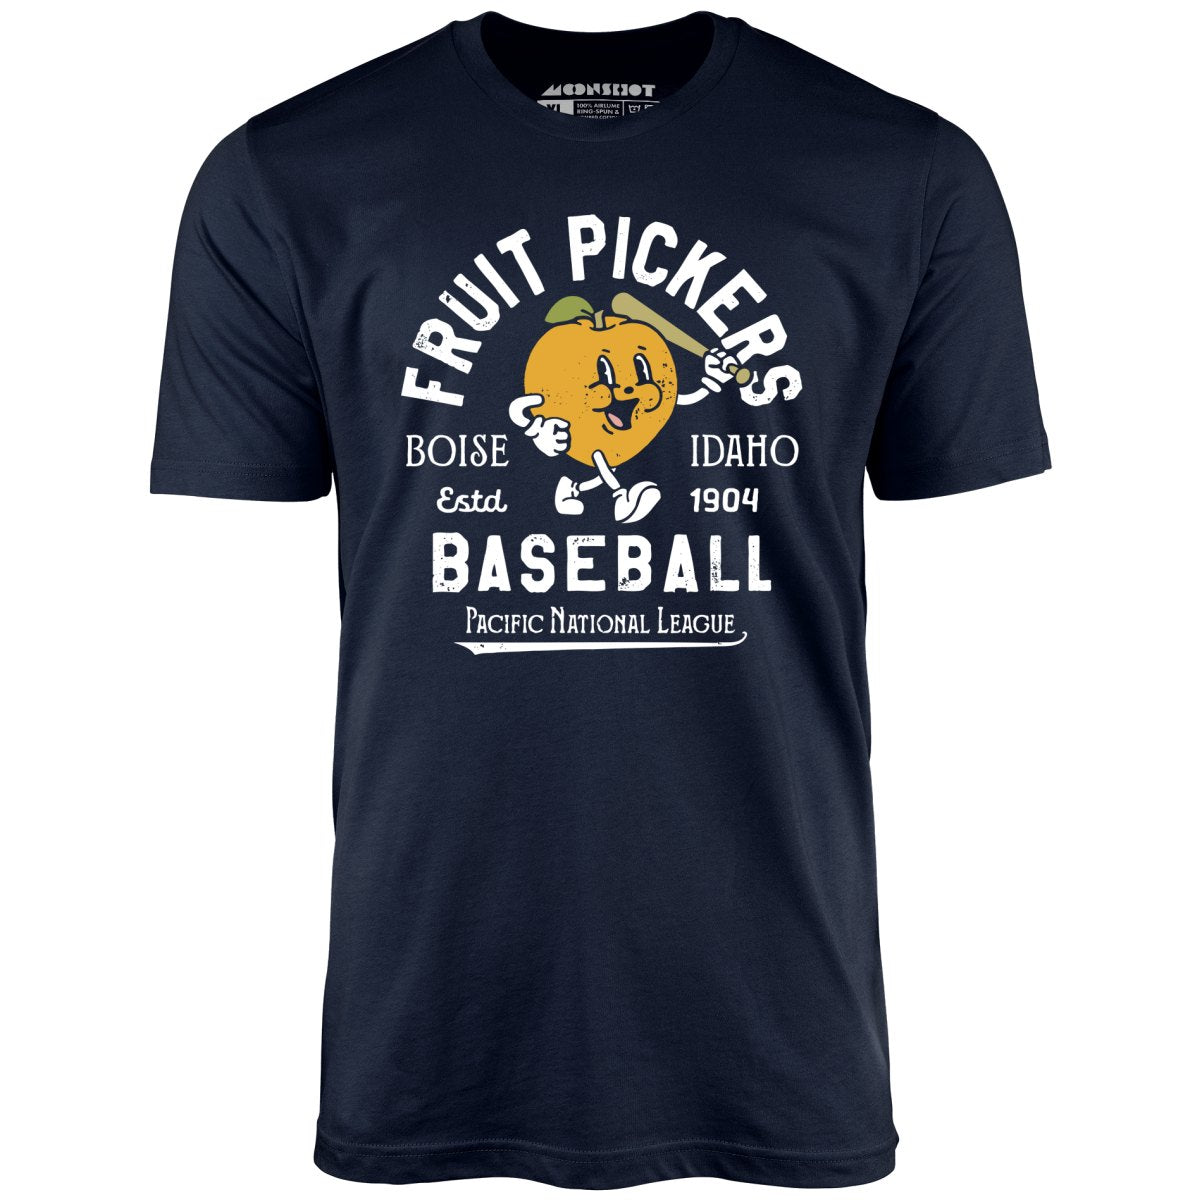 Boise Fruit Pickers - Idaho - Vintage Defunct Baseball Teams - Unisex T-Shirt